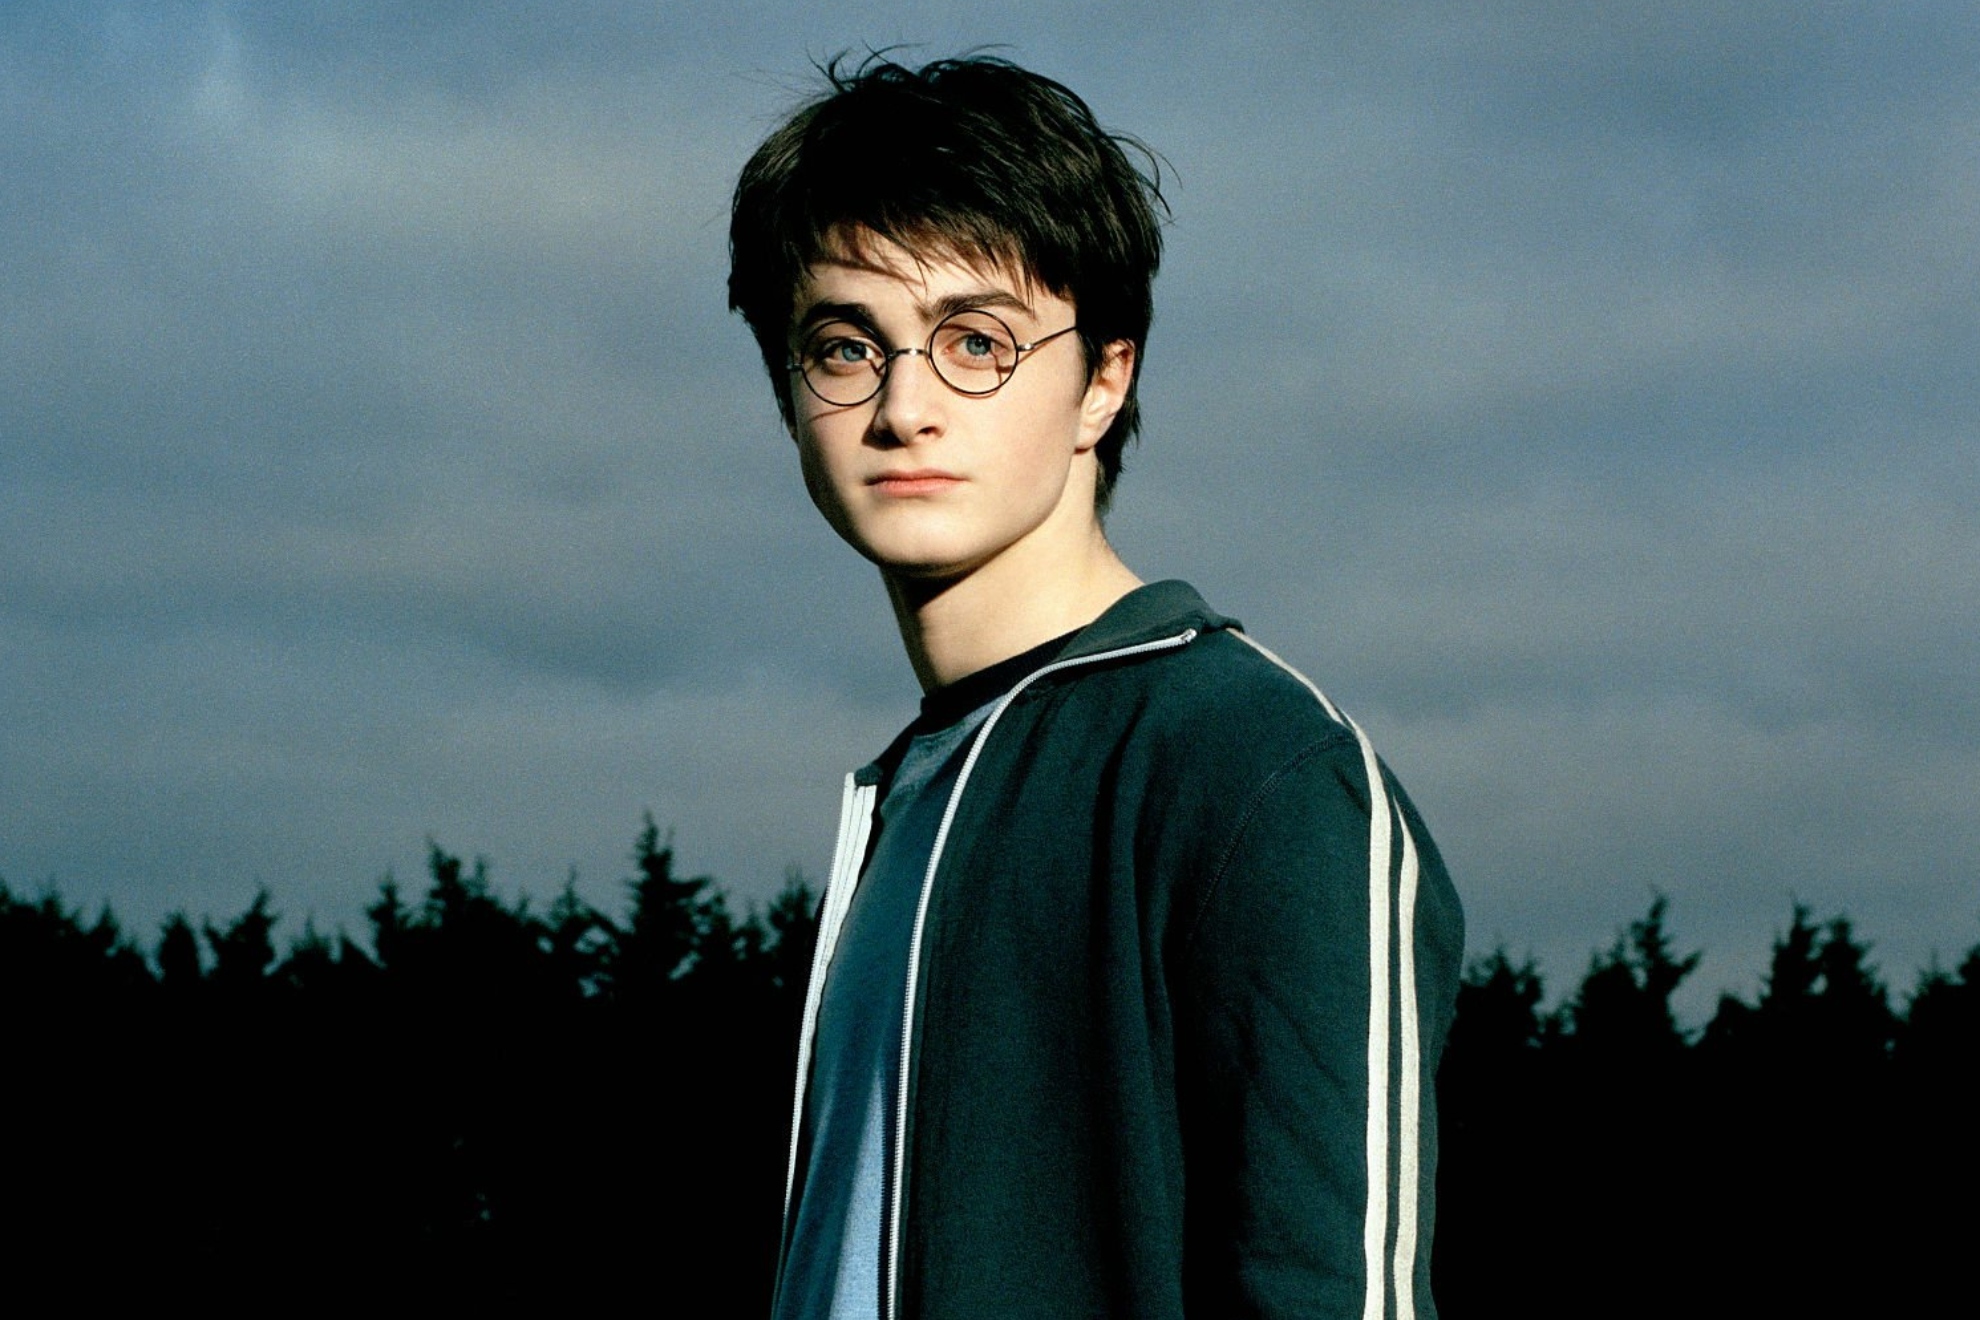 Daniel Radcliffe, en el papel de Harry Potter